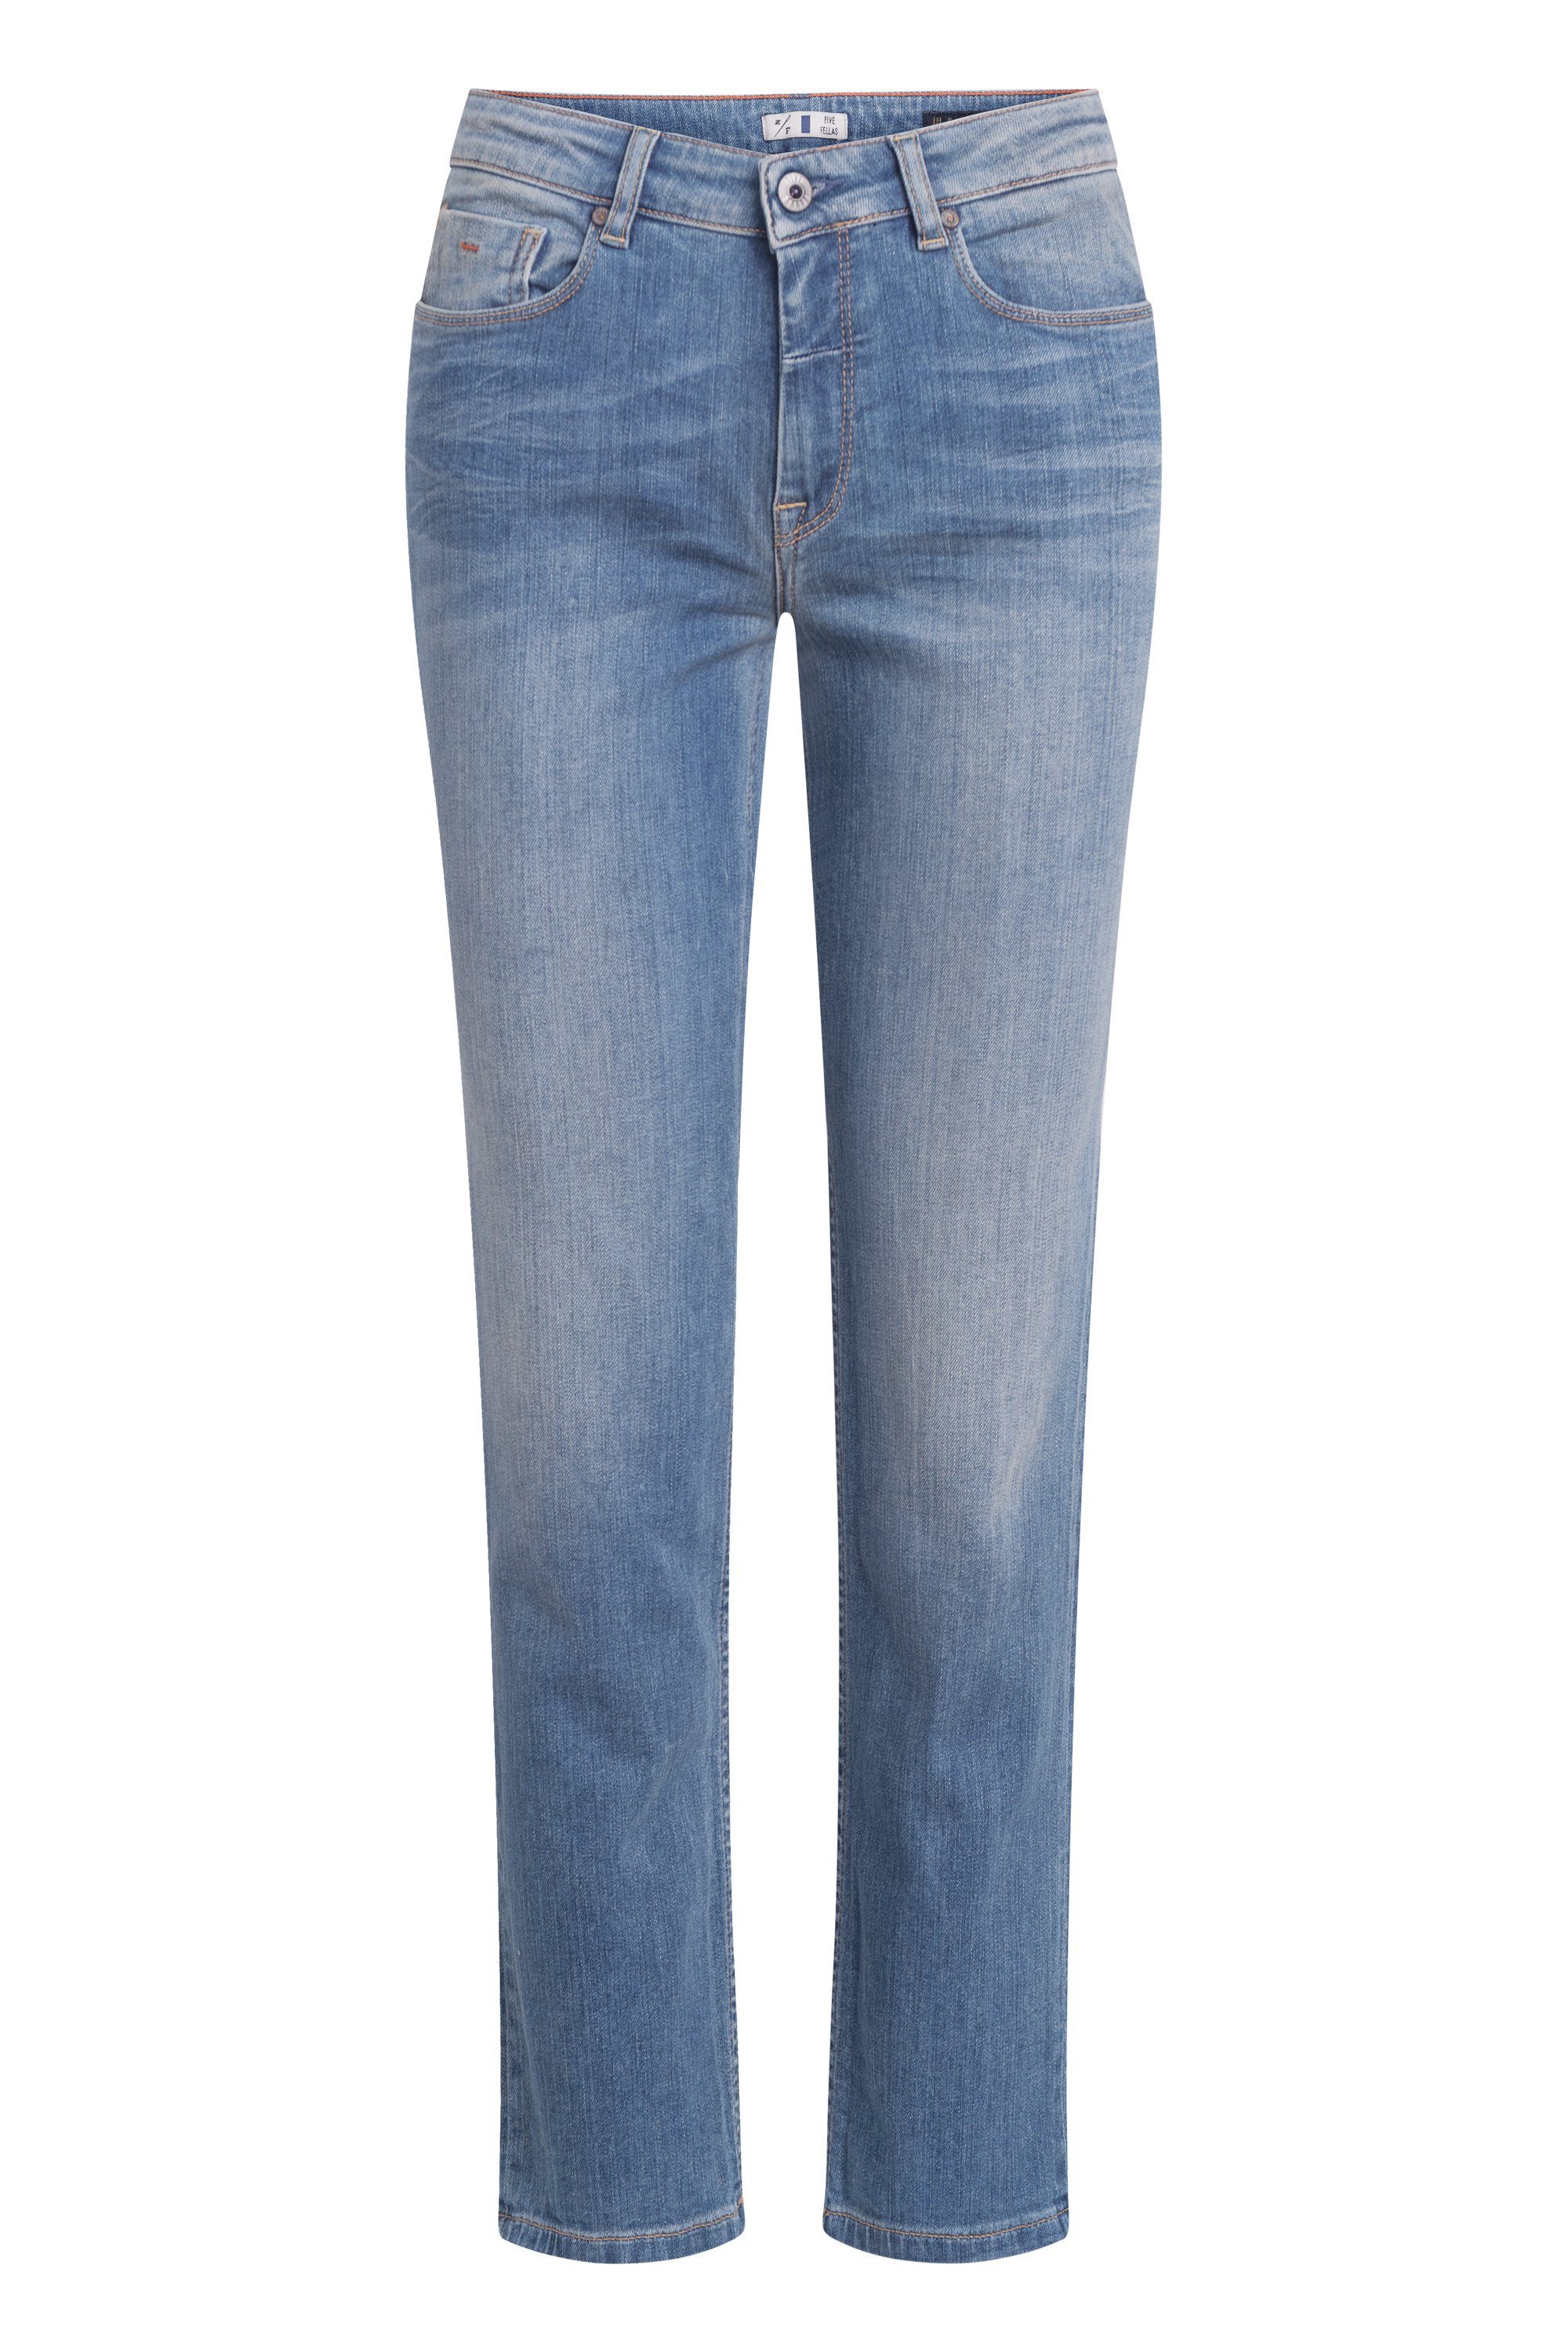 Straight-Jeans FELLAS blau shape nachhaltig, MAGGY magic FIVE 532-36M Stretch, Italien,